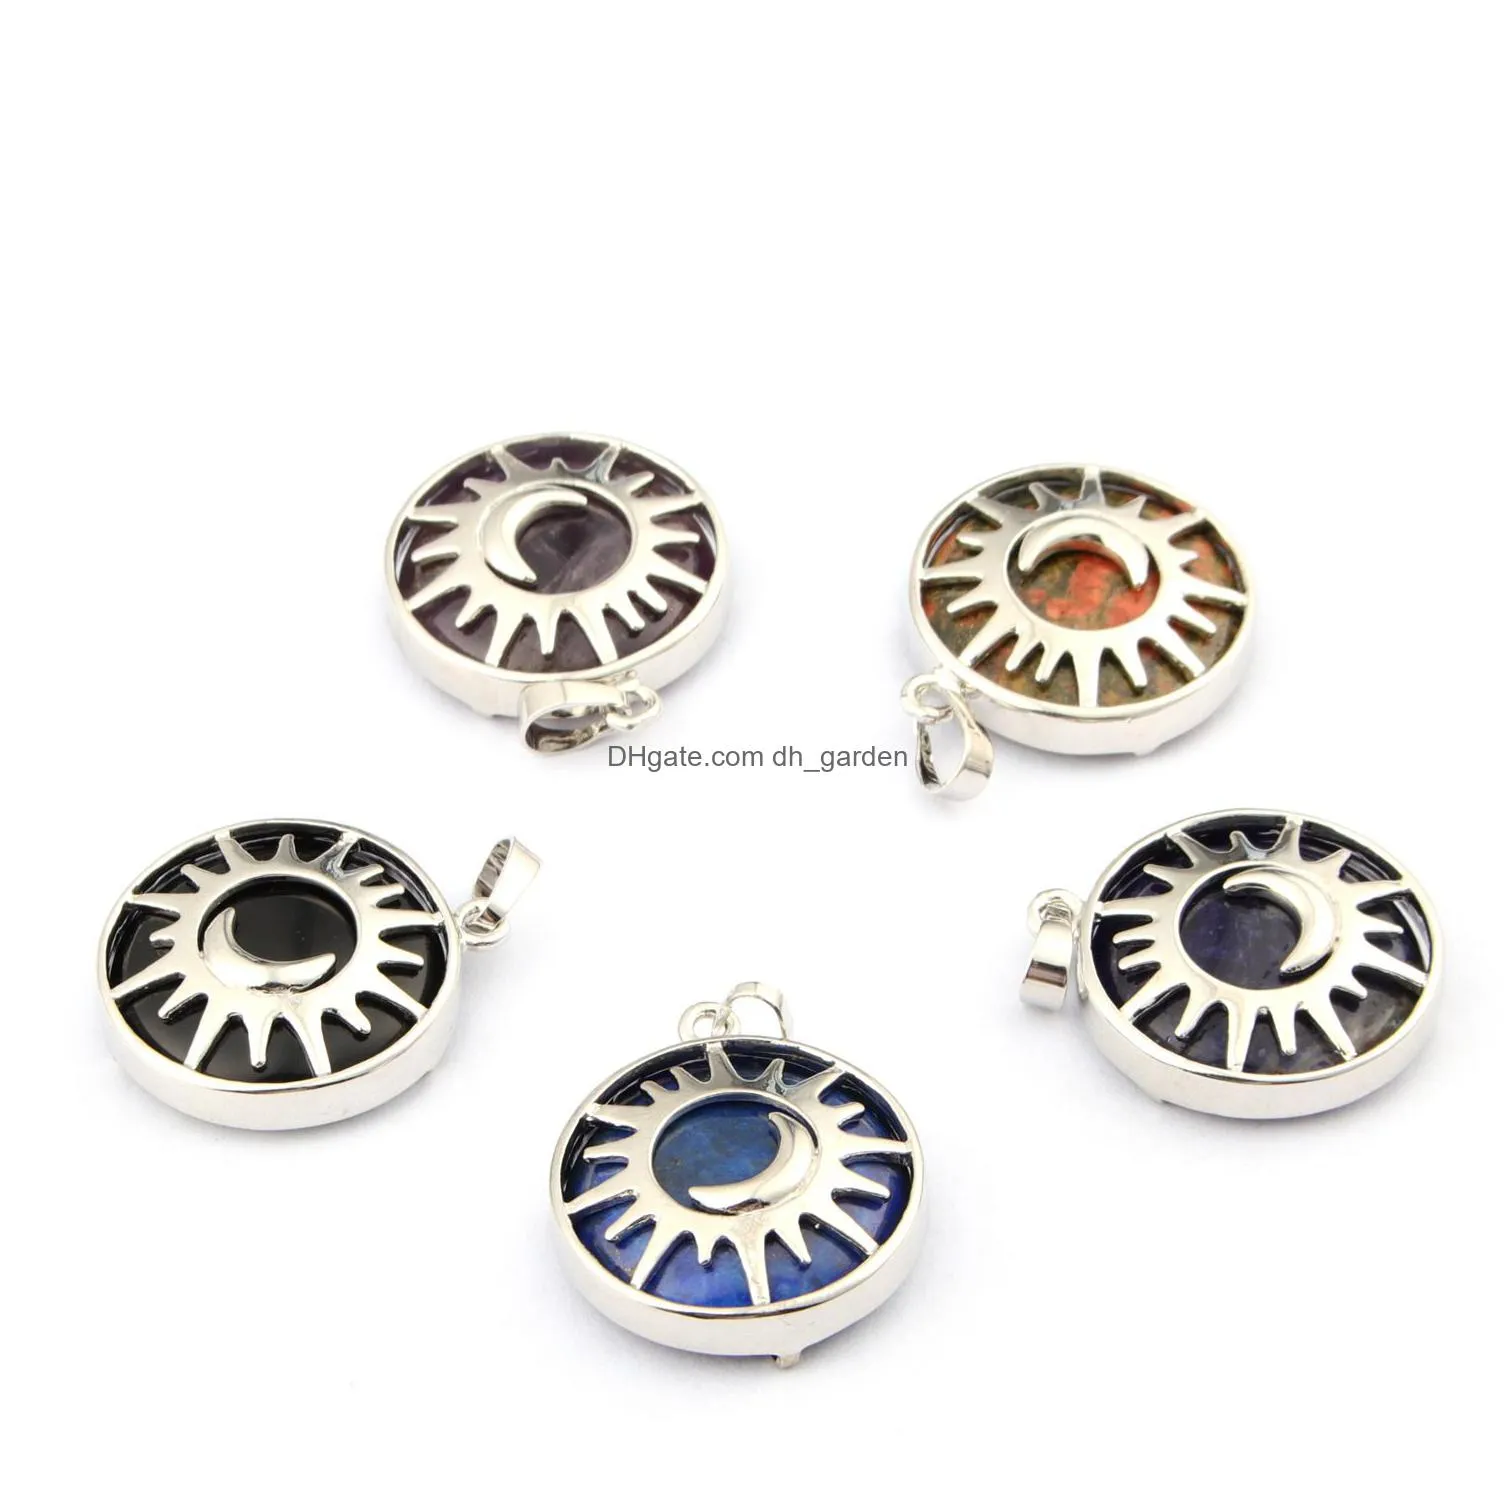 100pcs natural stone metal sun moon shape charm healing pendant for necklace jewelry making women earring